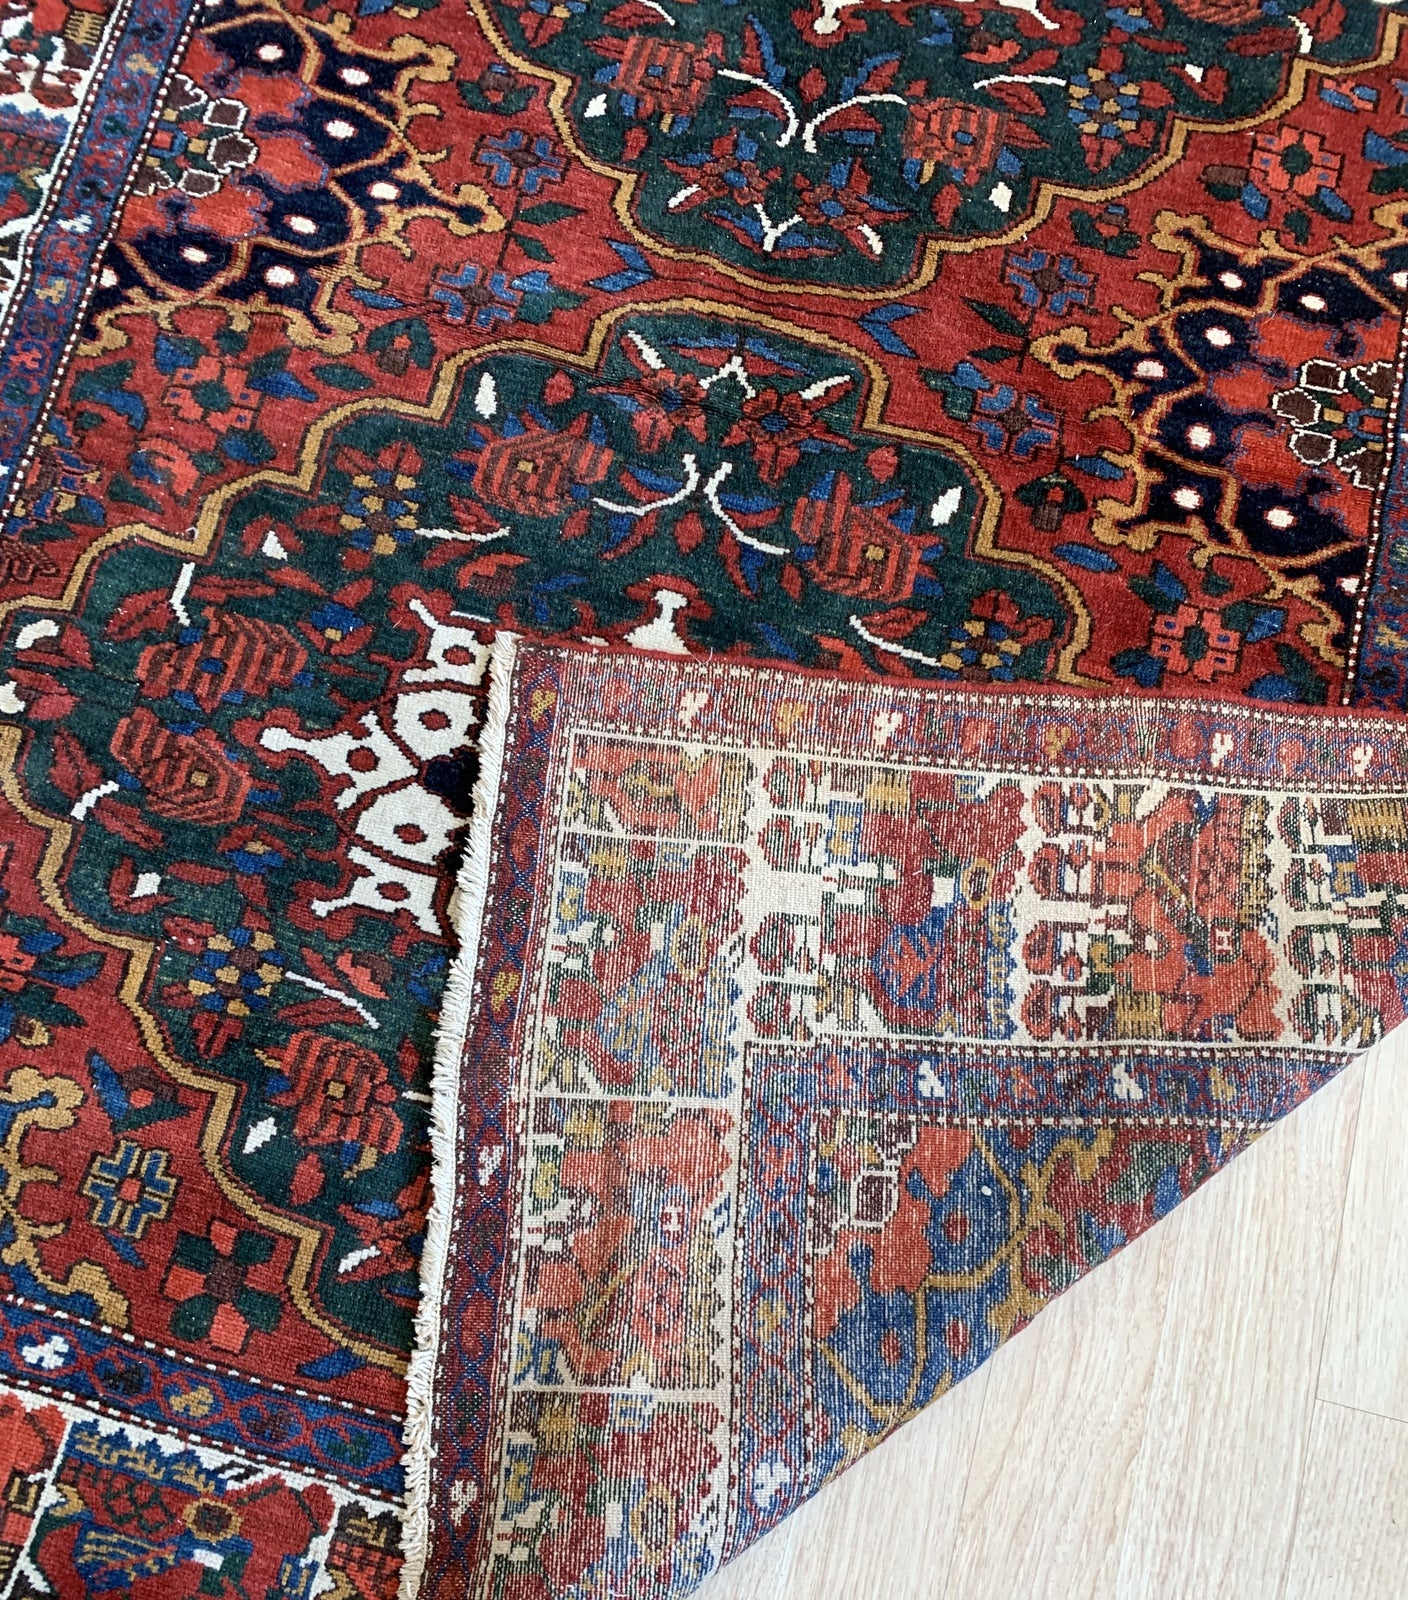 Handmade antique Persian Bakhtiari rug 1920s